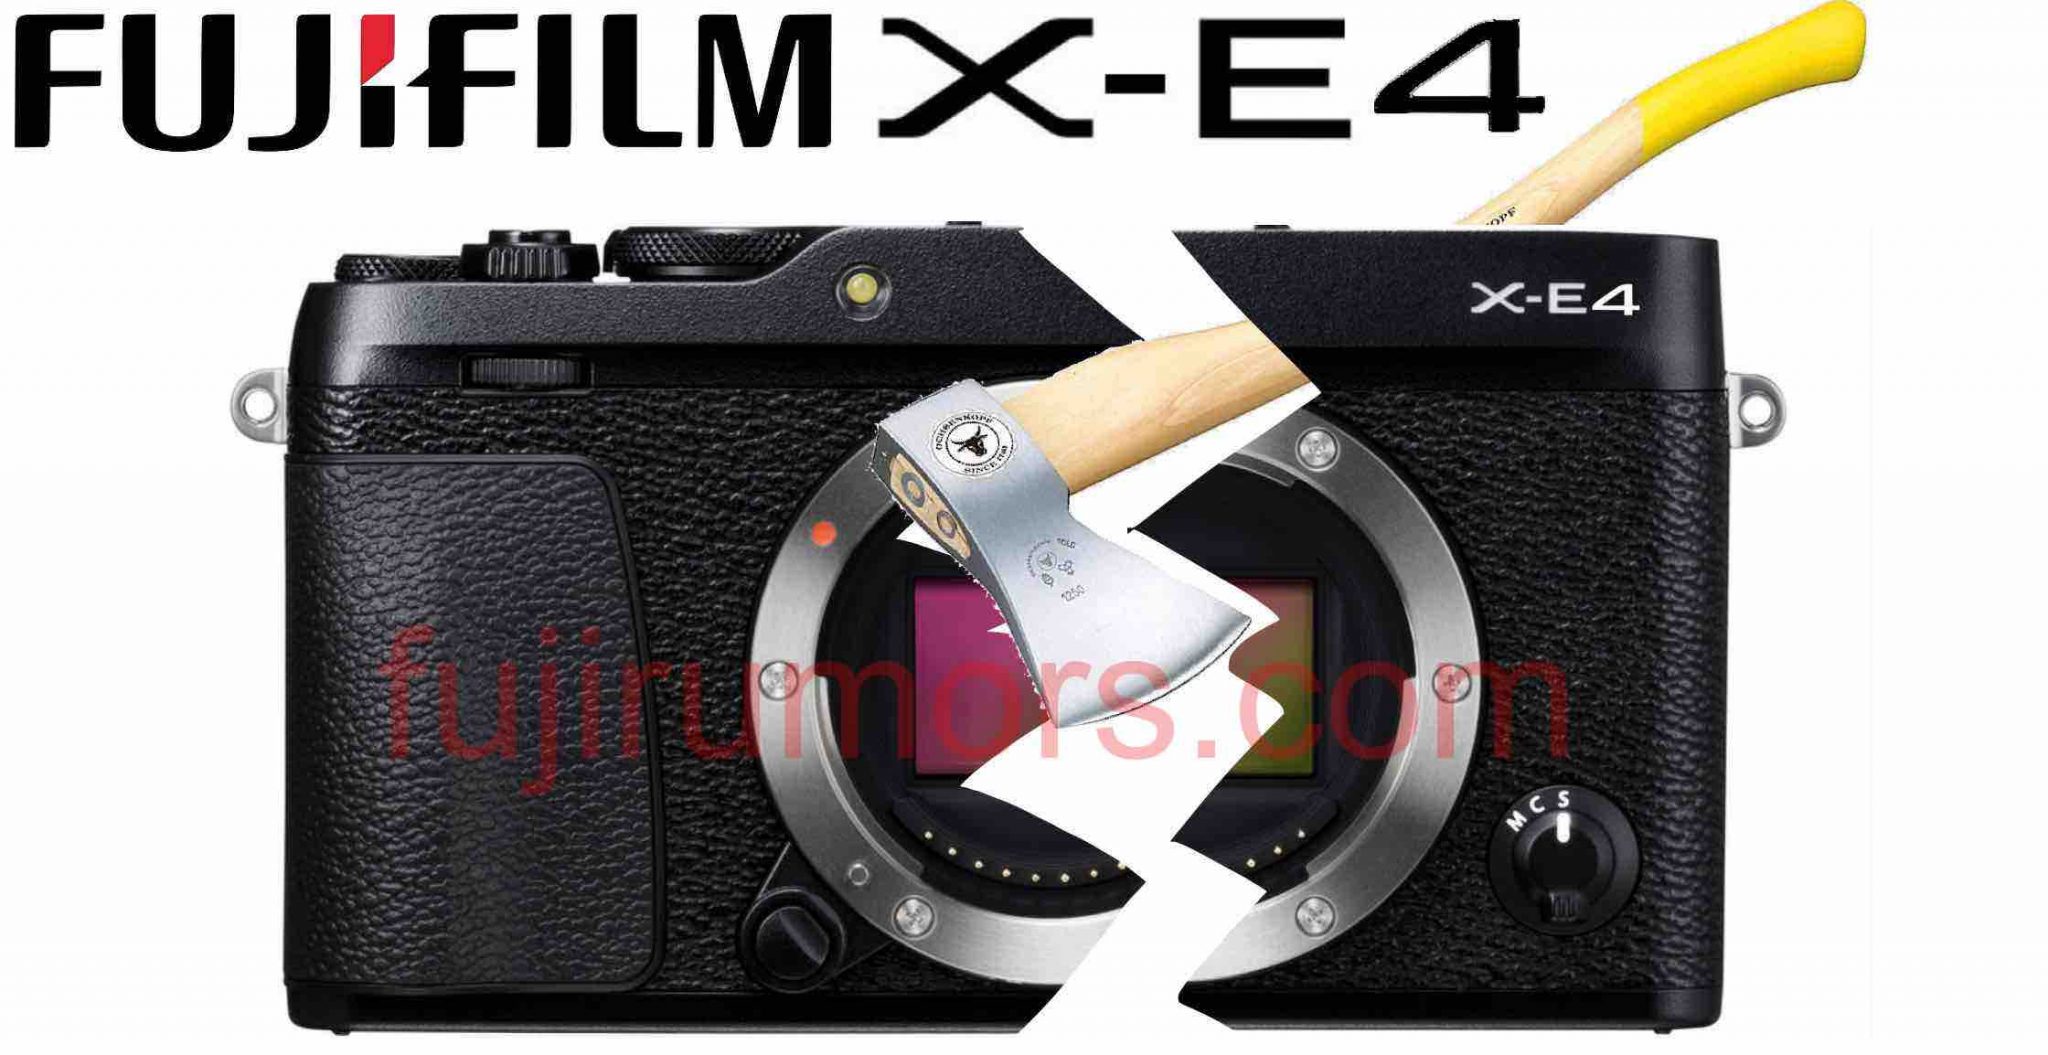 RUMOR: Fujifilm X-E line Canceled, Game Over for Fujifilm X-E4 - Fuji